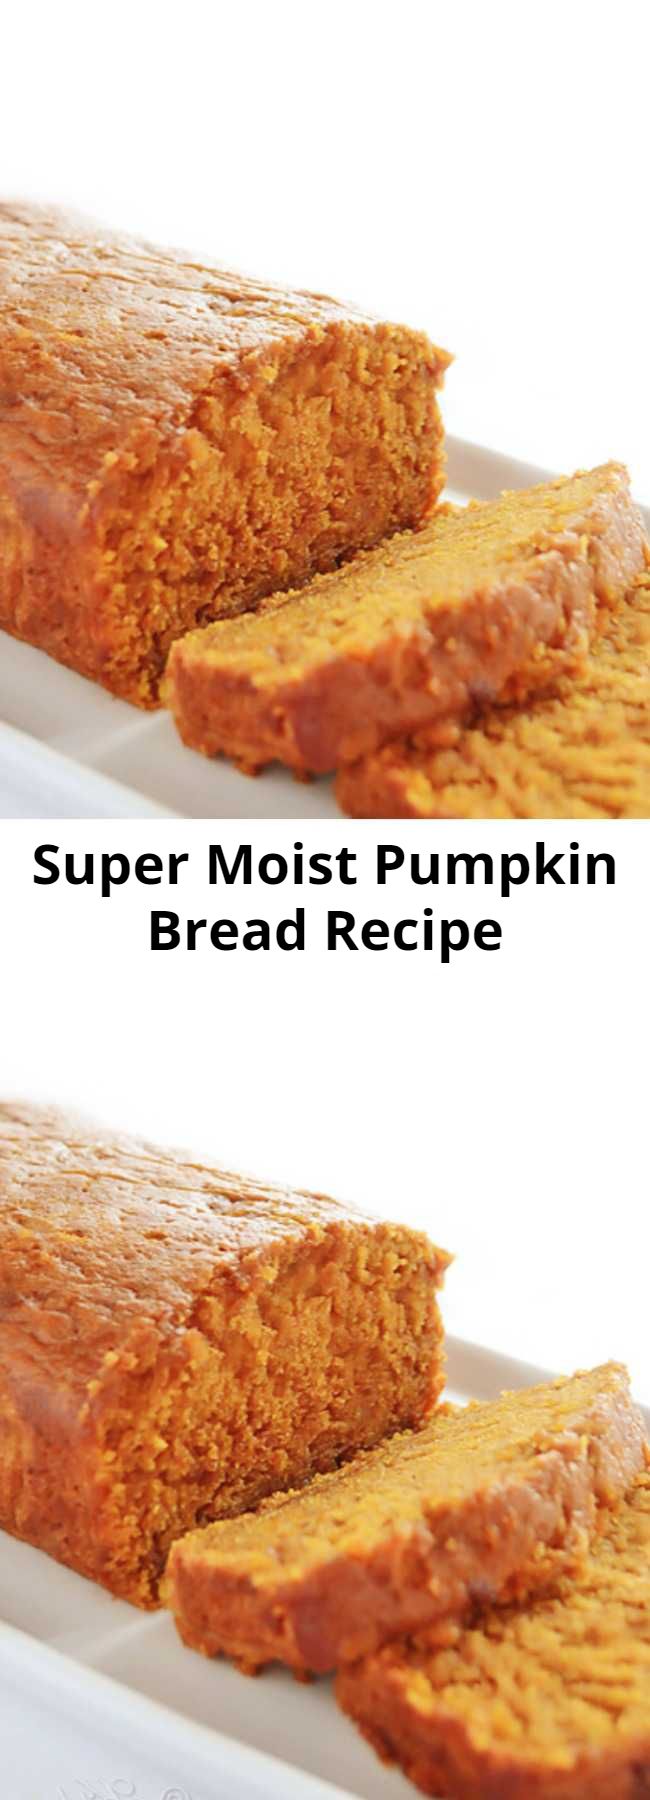 Super Moist Pumpkin Bread Recipe - See what is the trick to keeping it super moist!